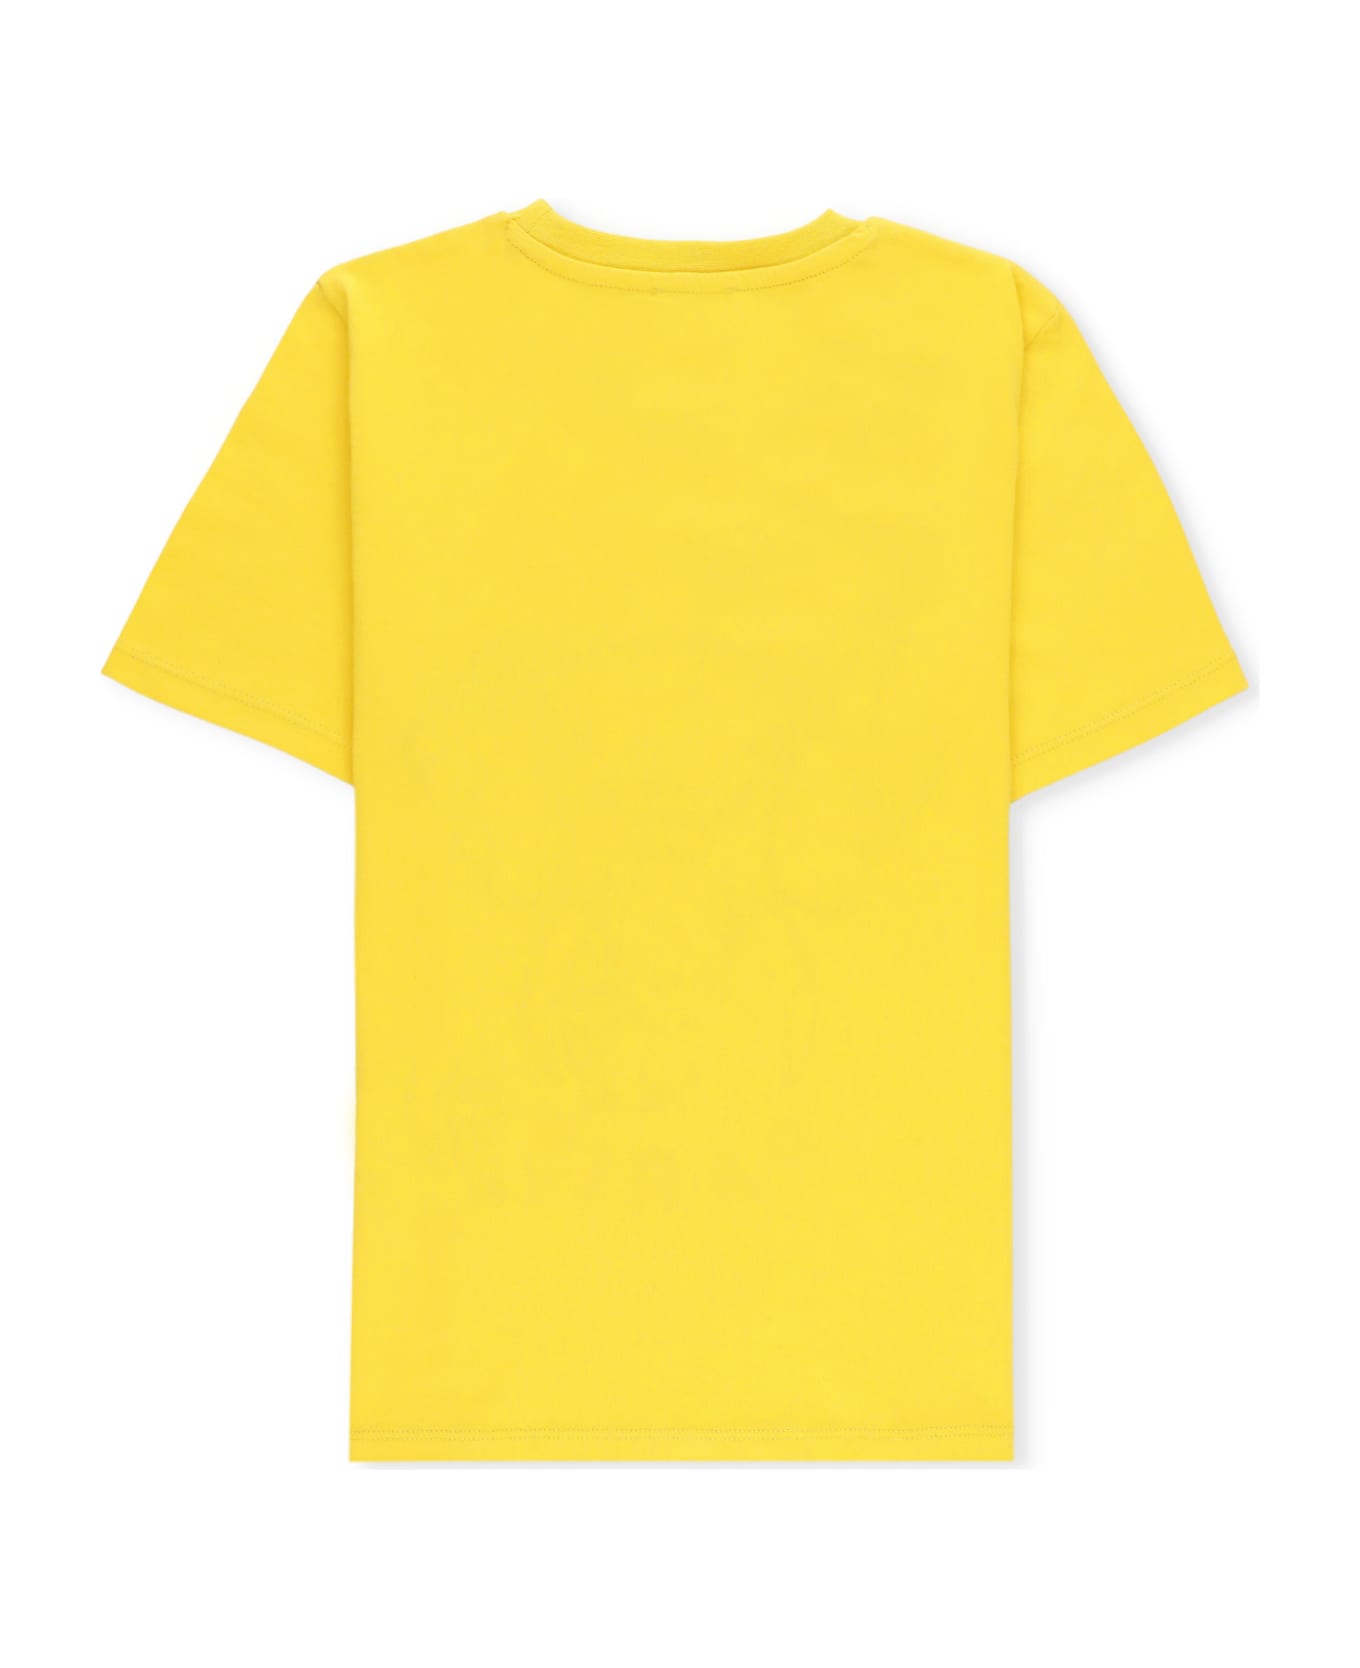 Kenzo Kids T-shirt With Logo - Yellow